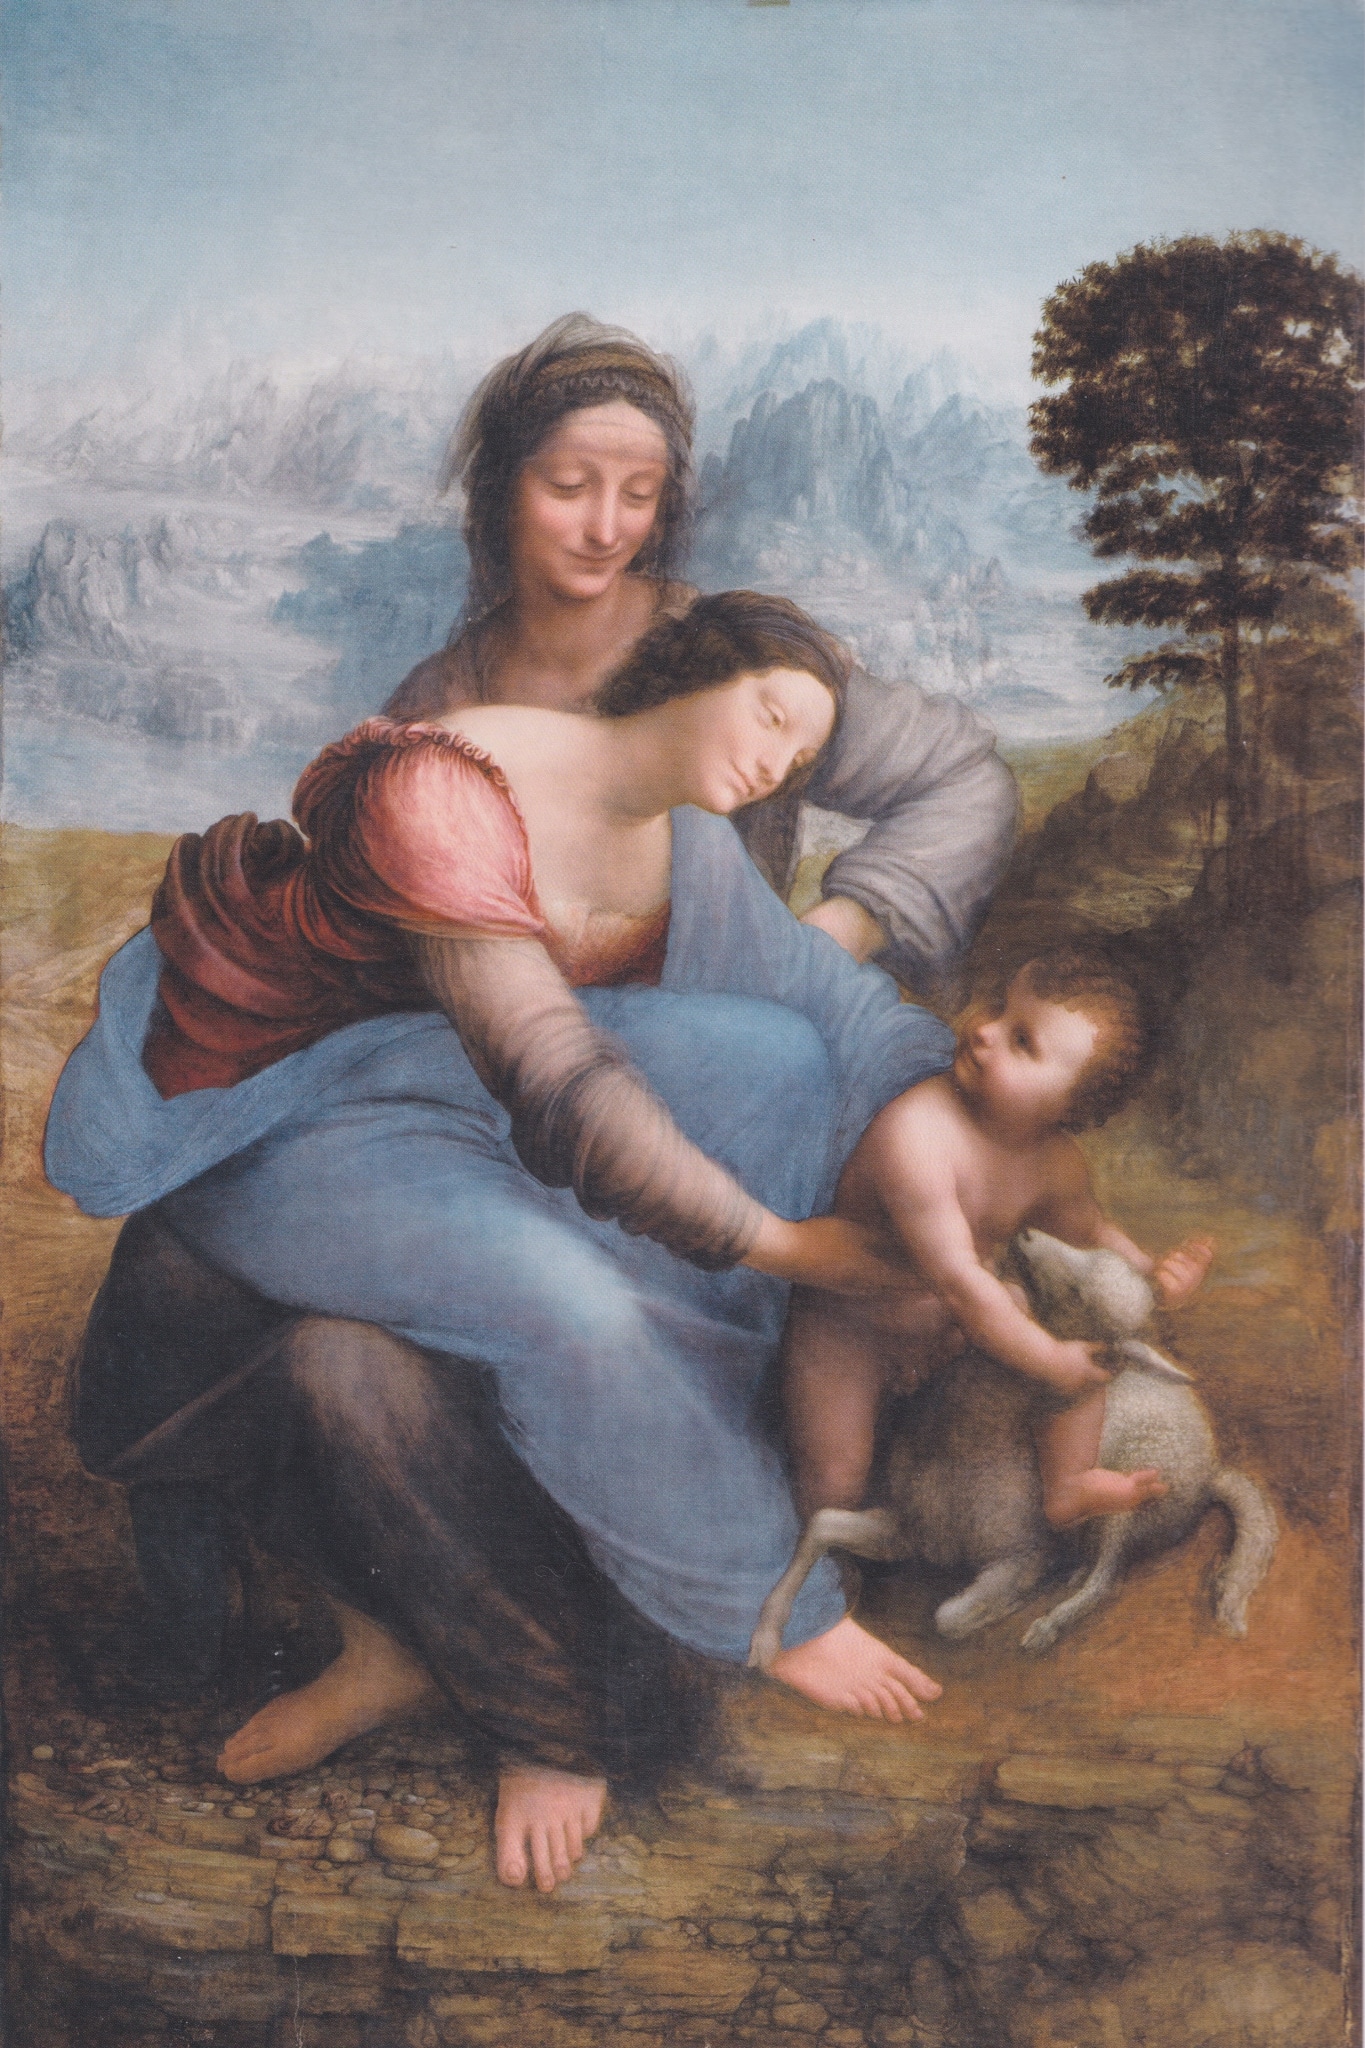 Painting by Leonardo da Vinci